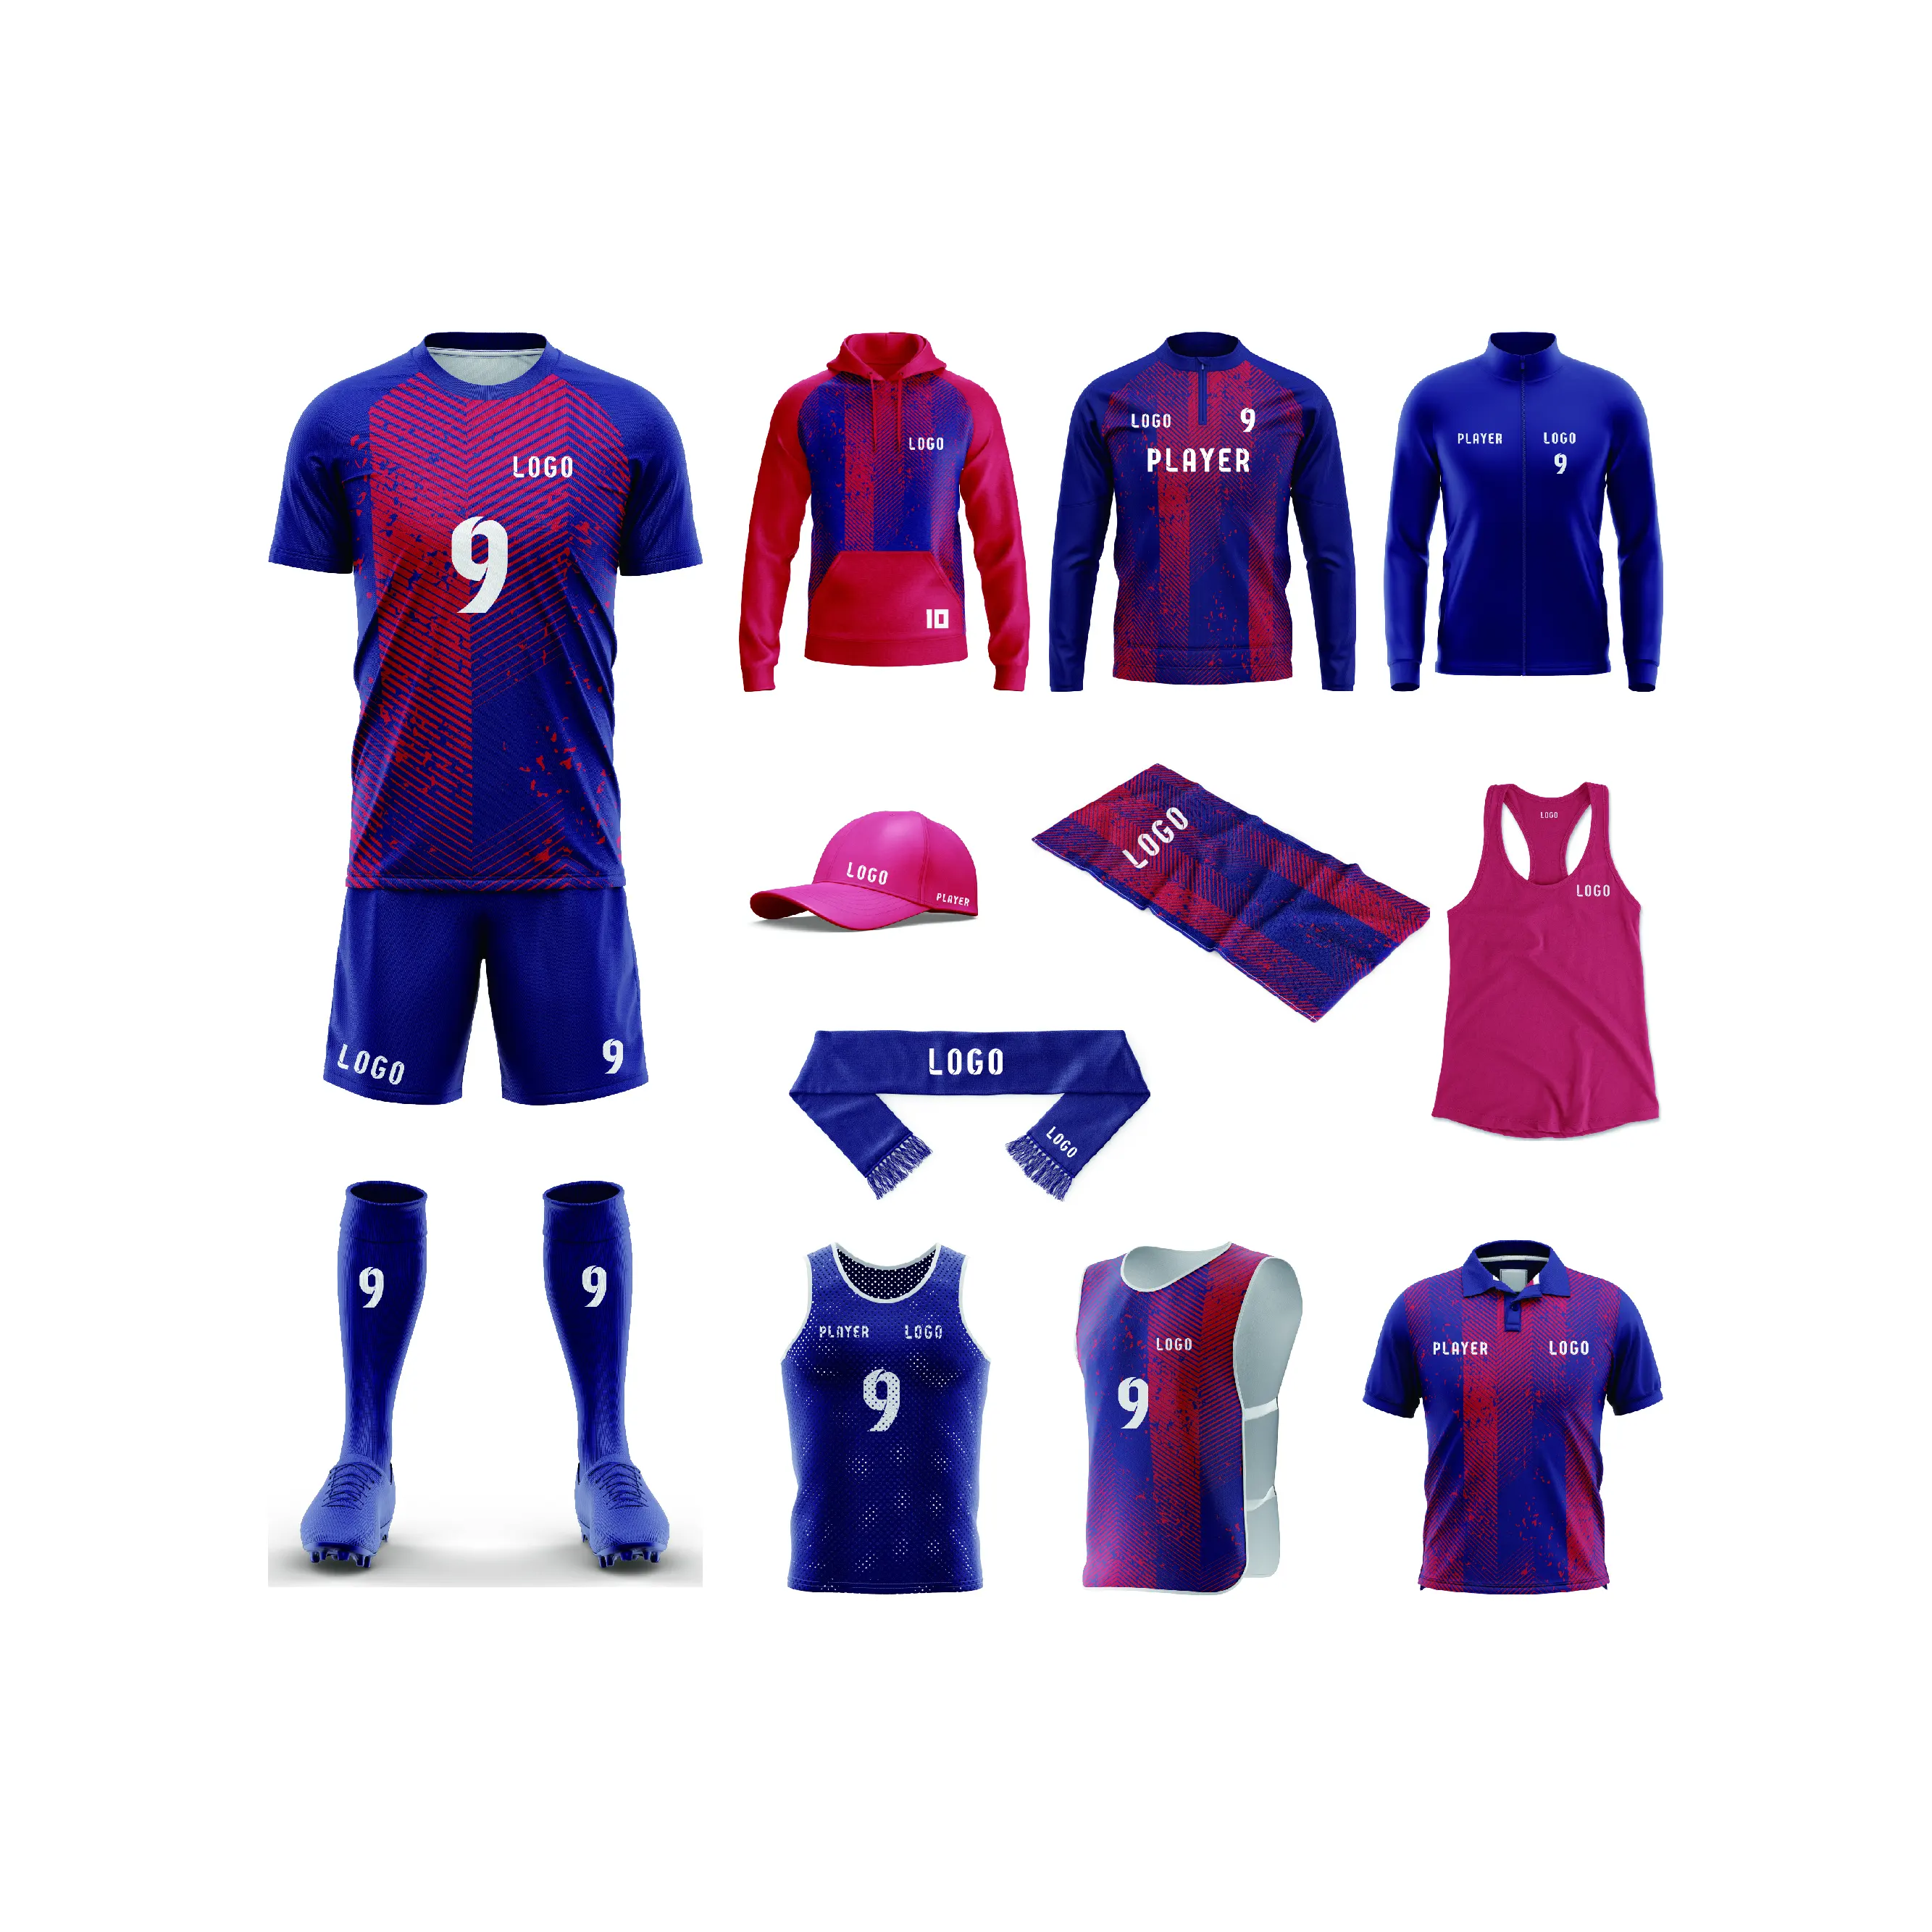 Kostengünstige individuelle Sportbekleidung, Fußballtrikot-Design, Fußballtrikot-Set